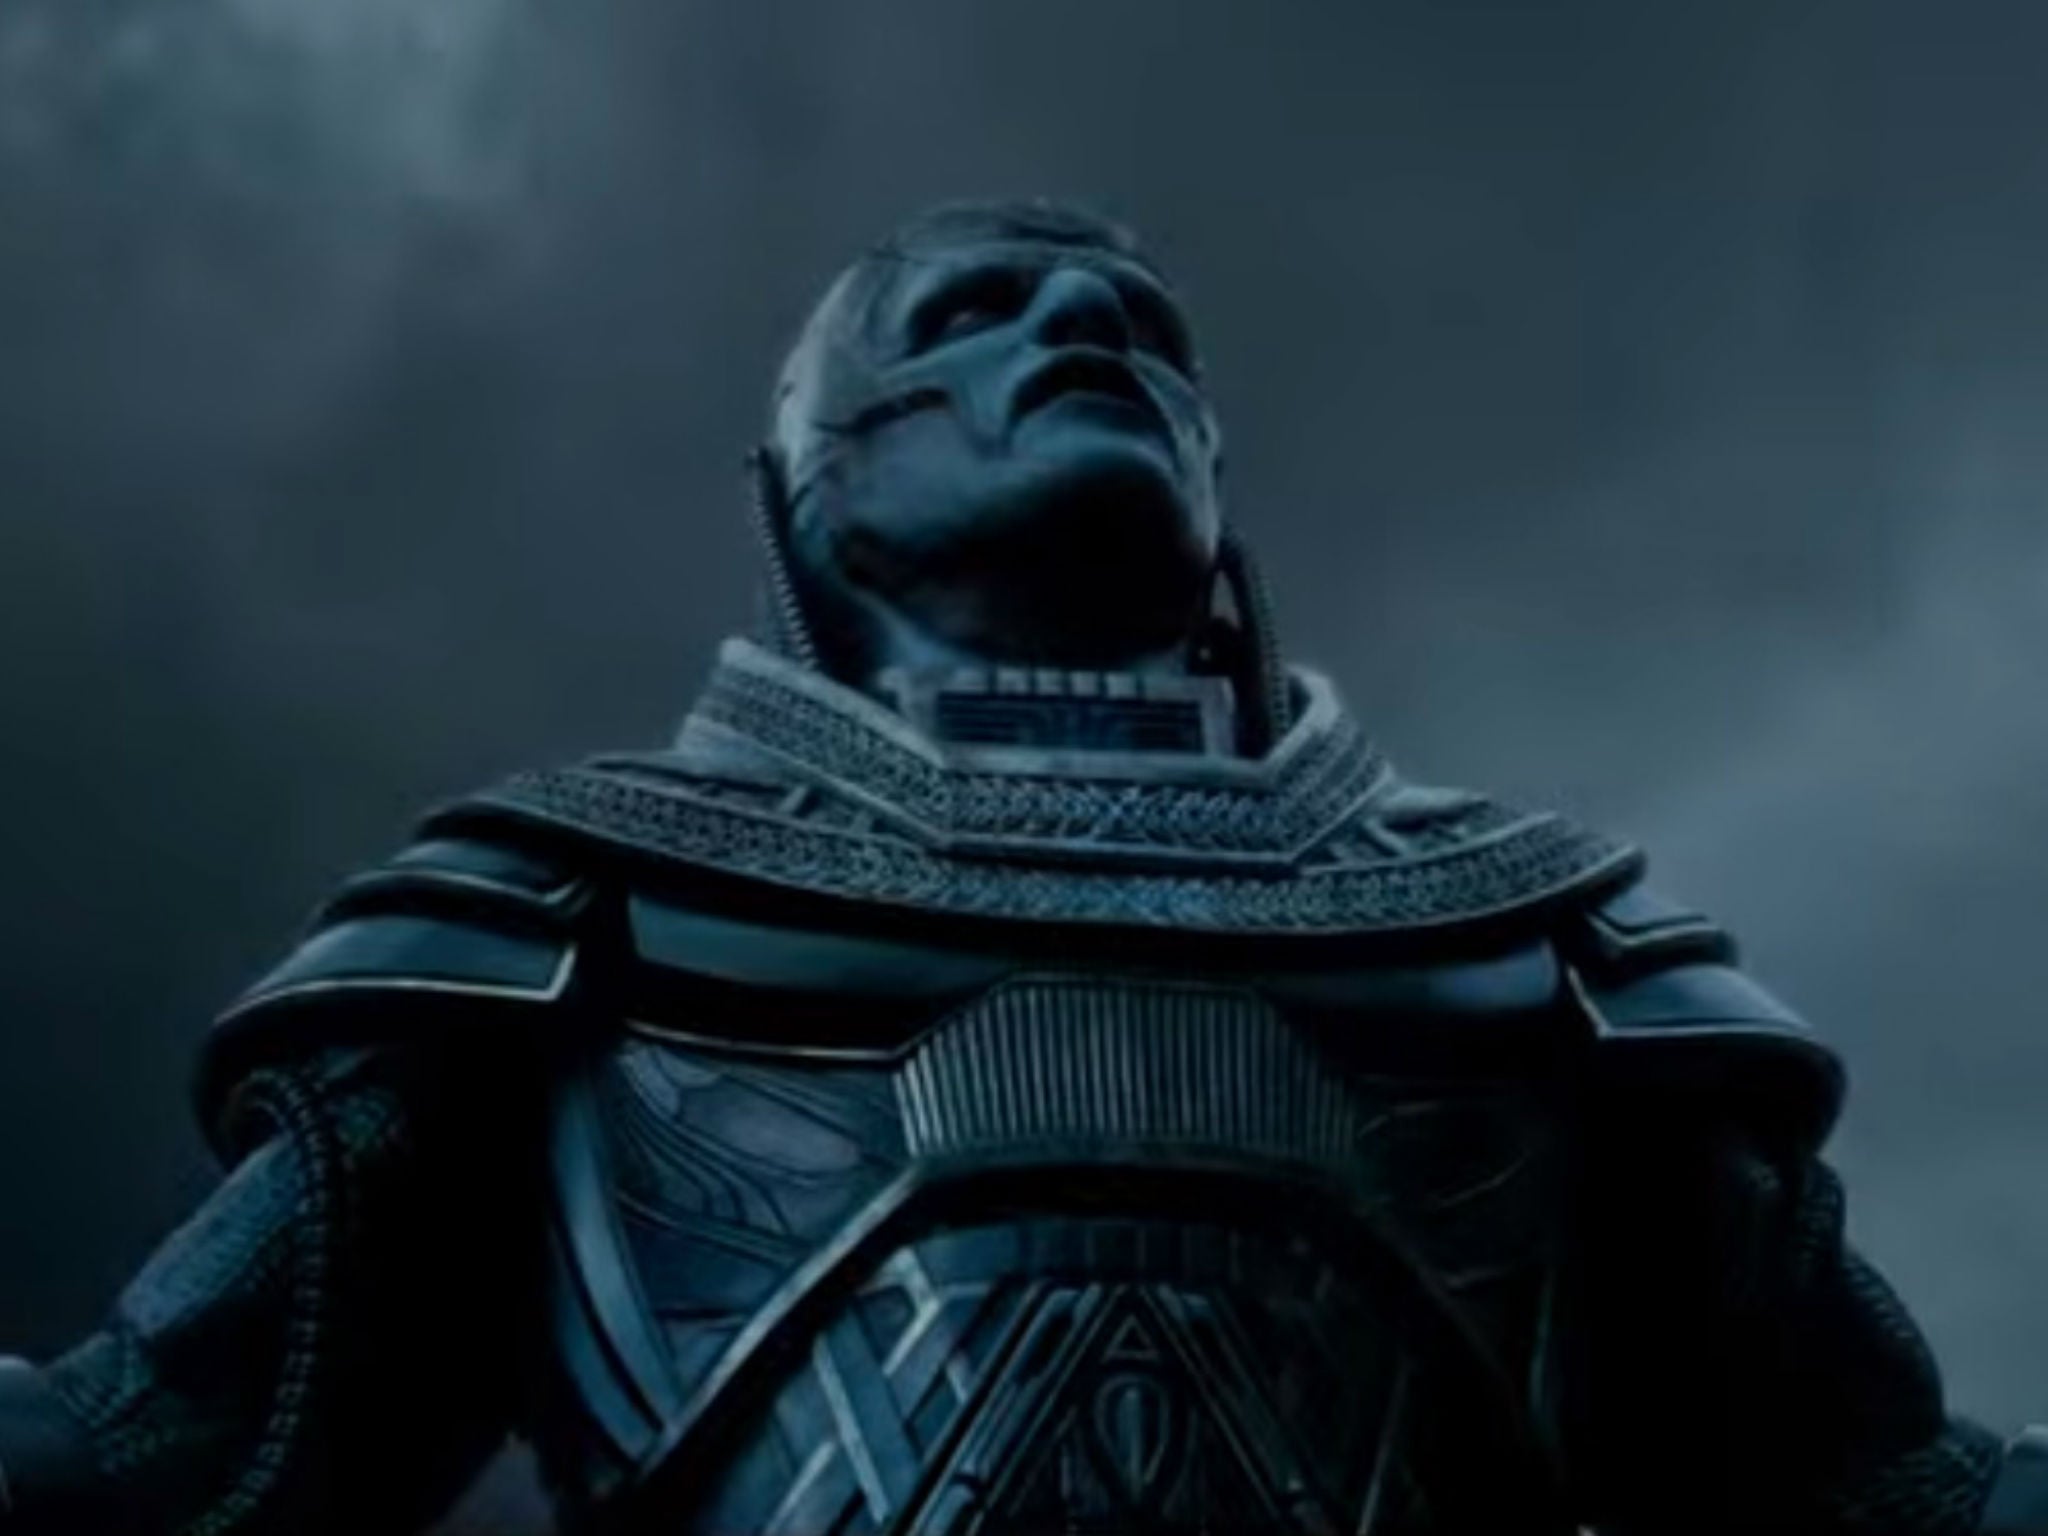 Oscar Isaac plays villain Apocalypse, who describes himself as an incarnation of Krishna